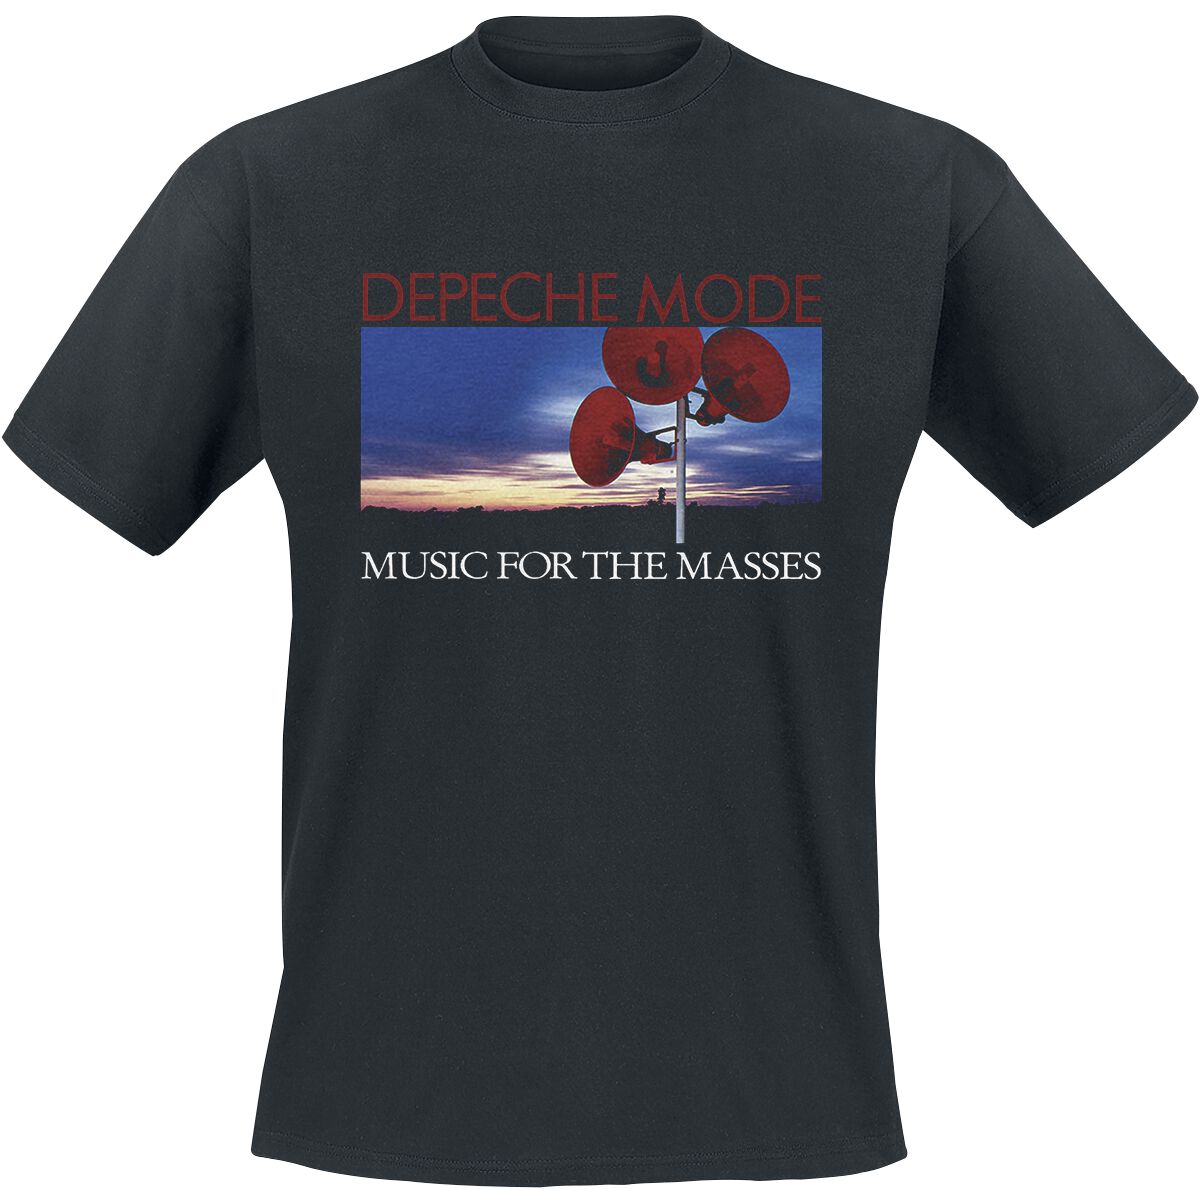 Depeche Mode T-Shirt - Music for the masses - S bis 4XL - für Männer - Größe 3XL - schwarz  - Lizenziertes Merchandise!